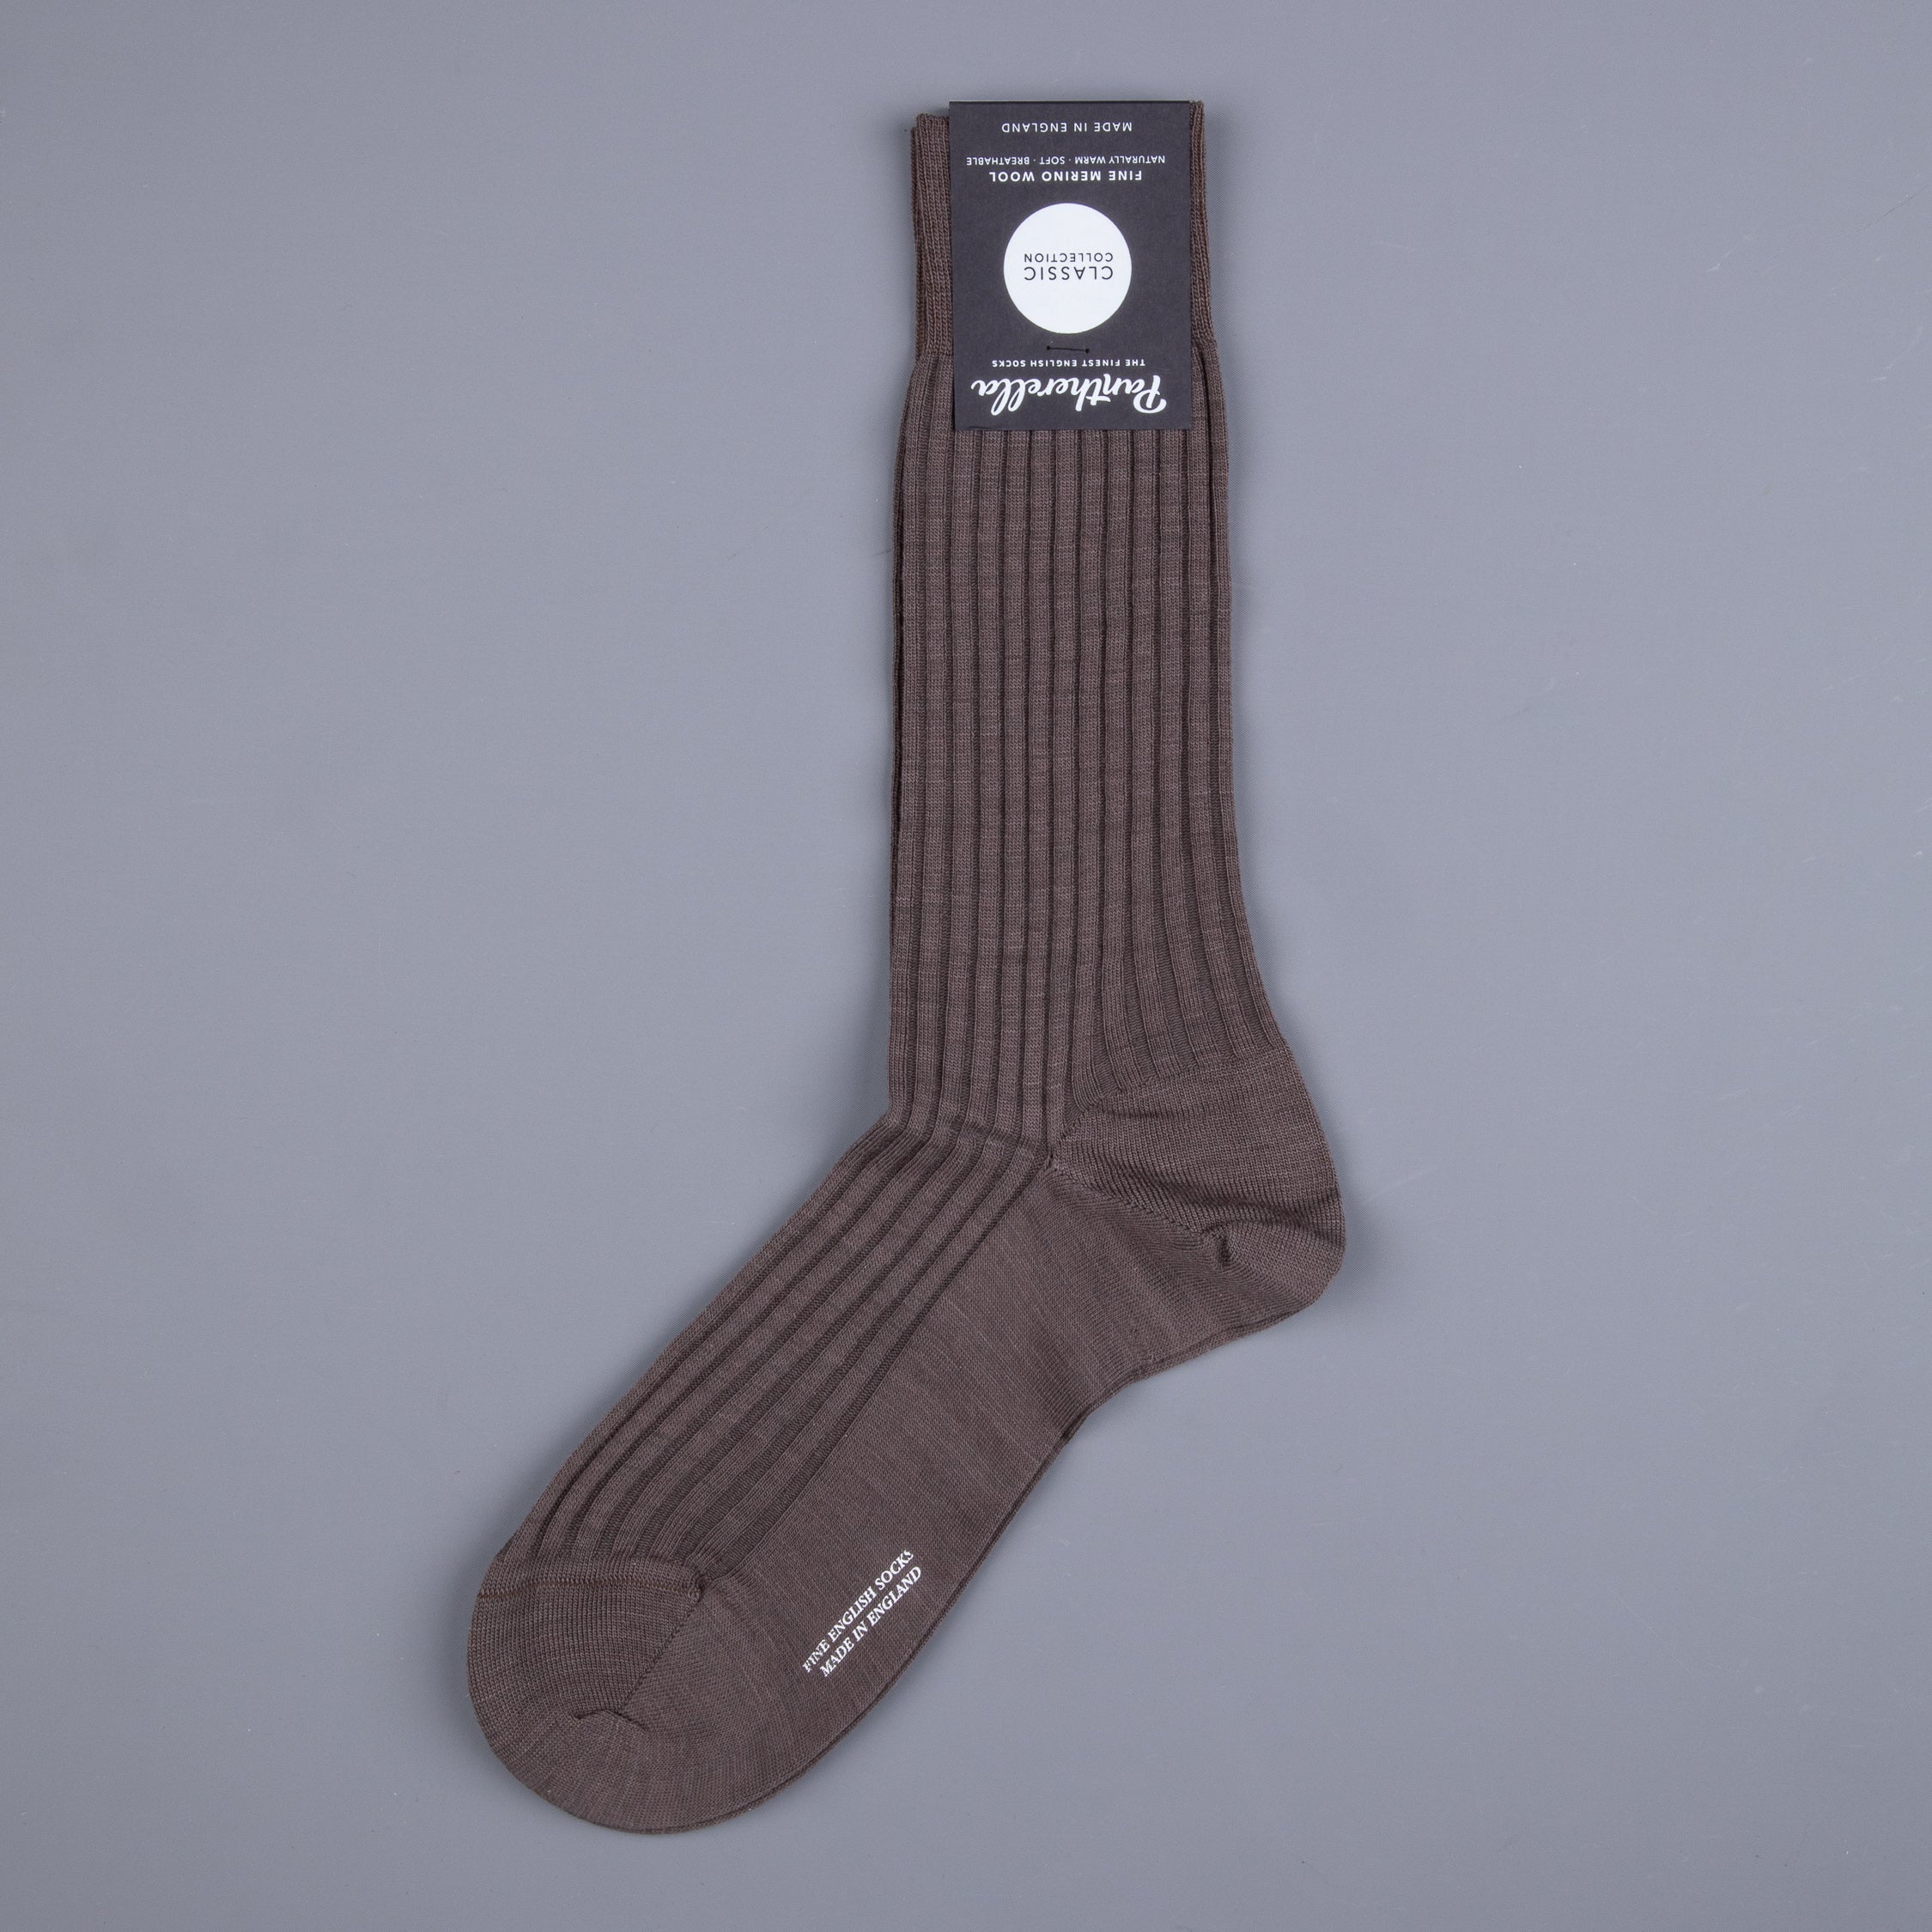 Frans Boone x Pantherella Laburnum Merino Wool Ankle High Socks Mole